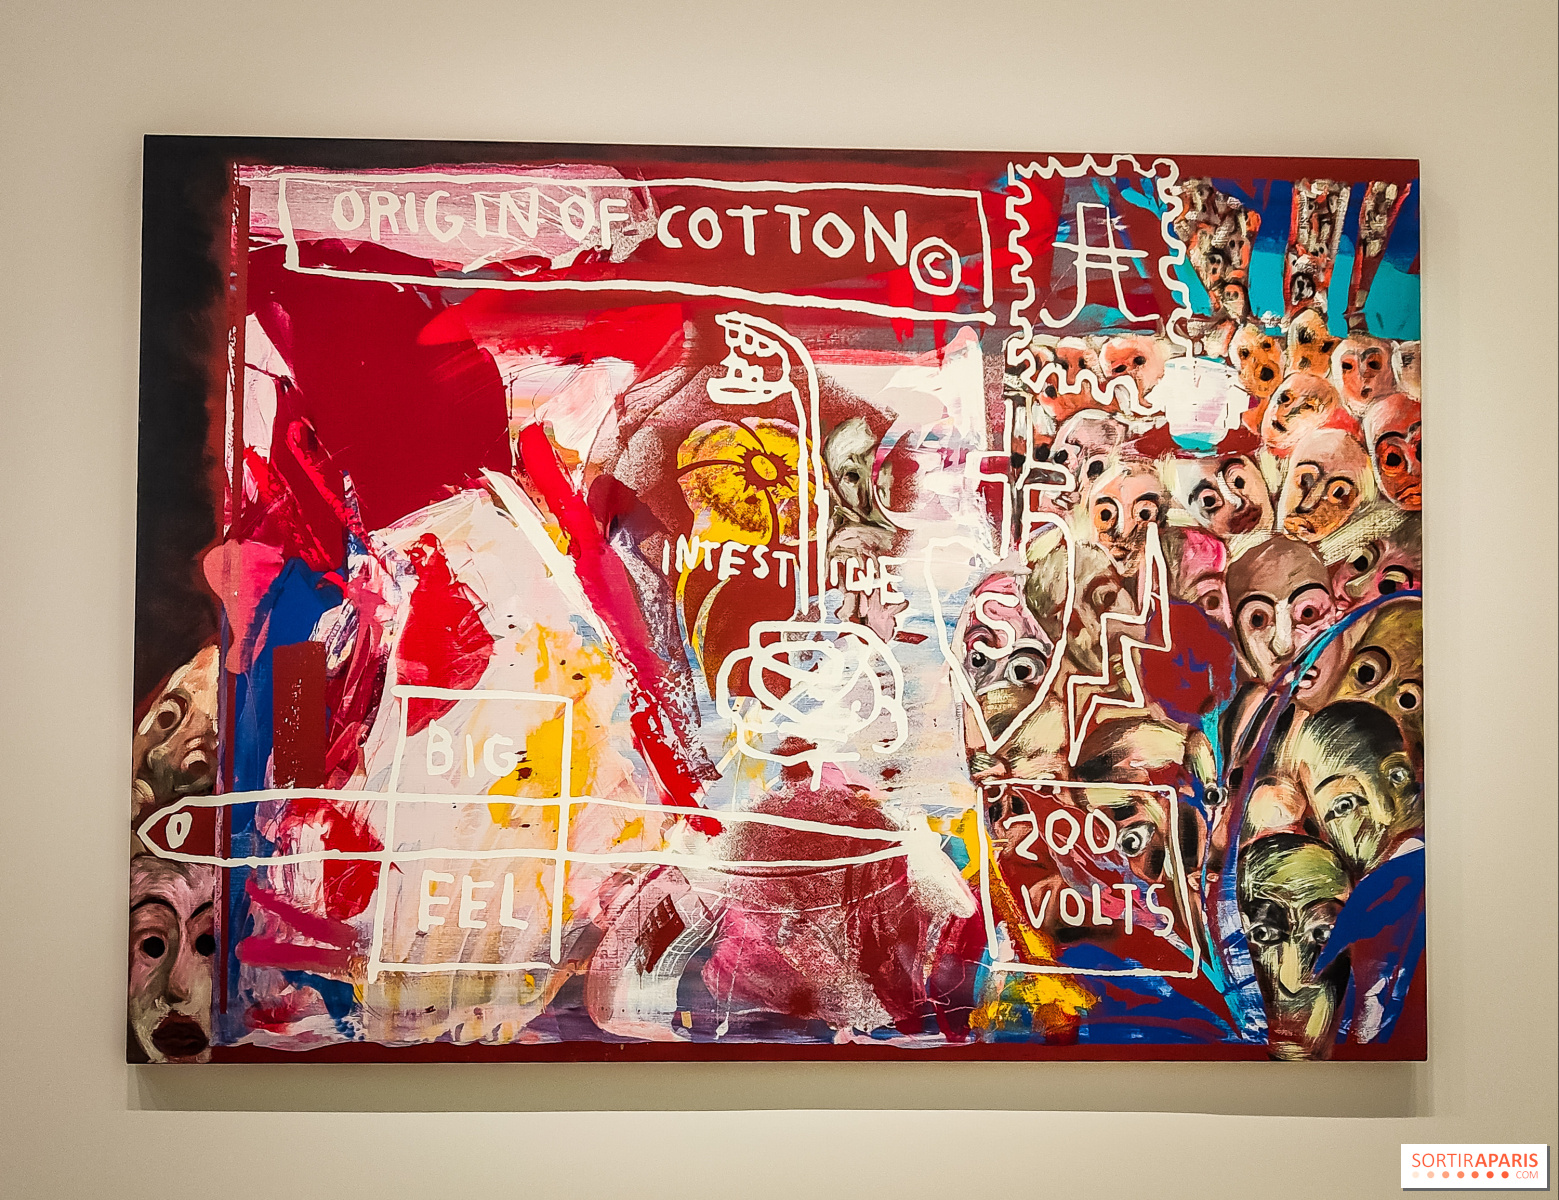 Basquiat x Warhol” at the Fondation Louis Vuitton